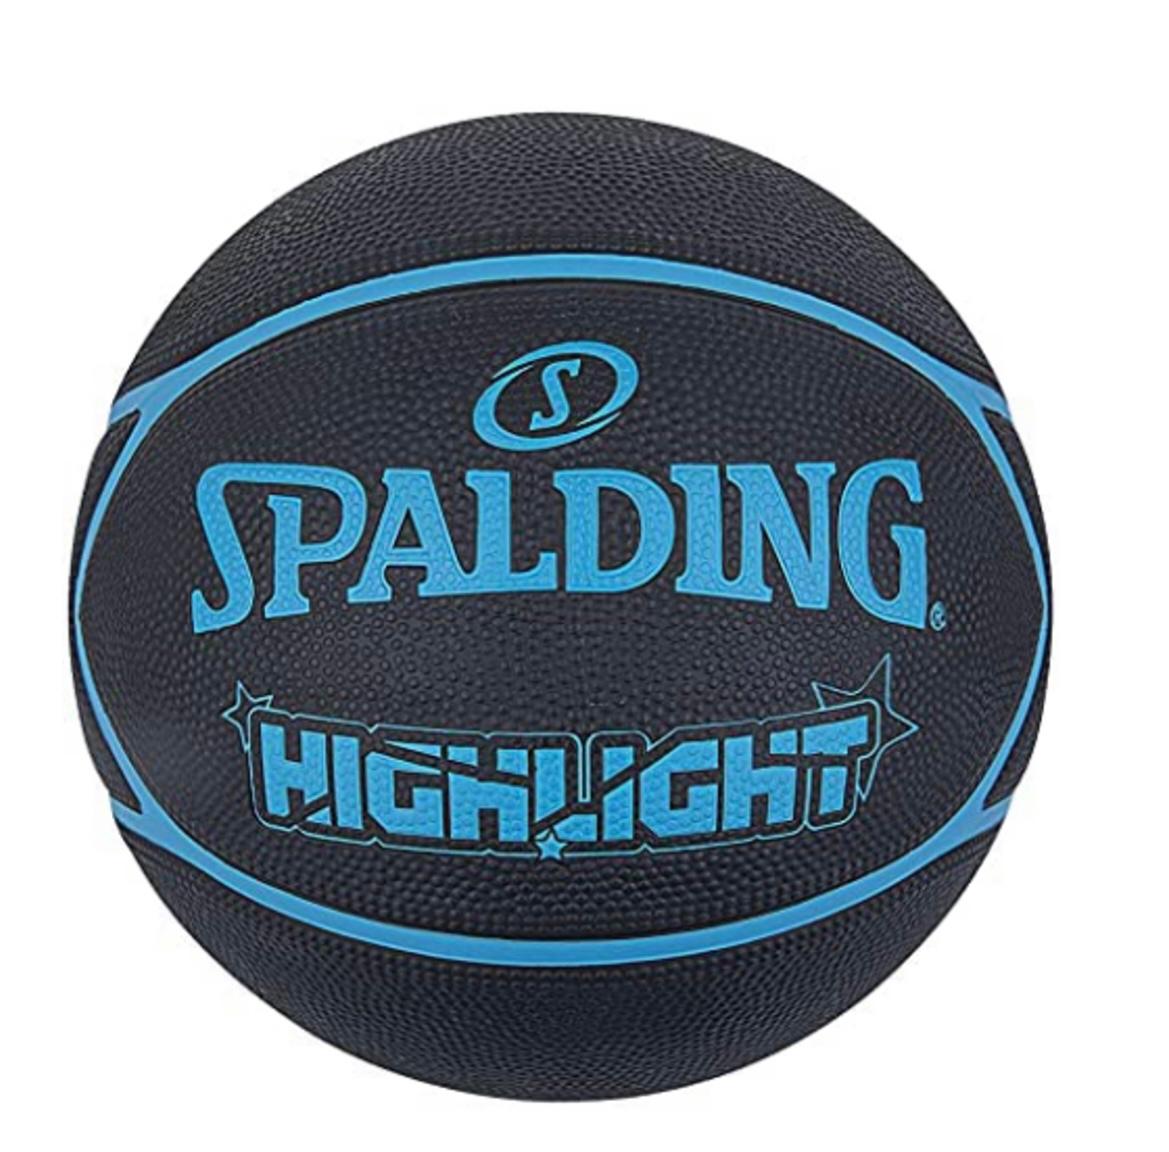 Spalding Highlight Basketball Black & Blue